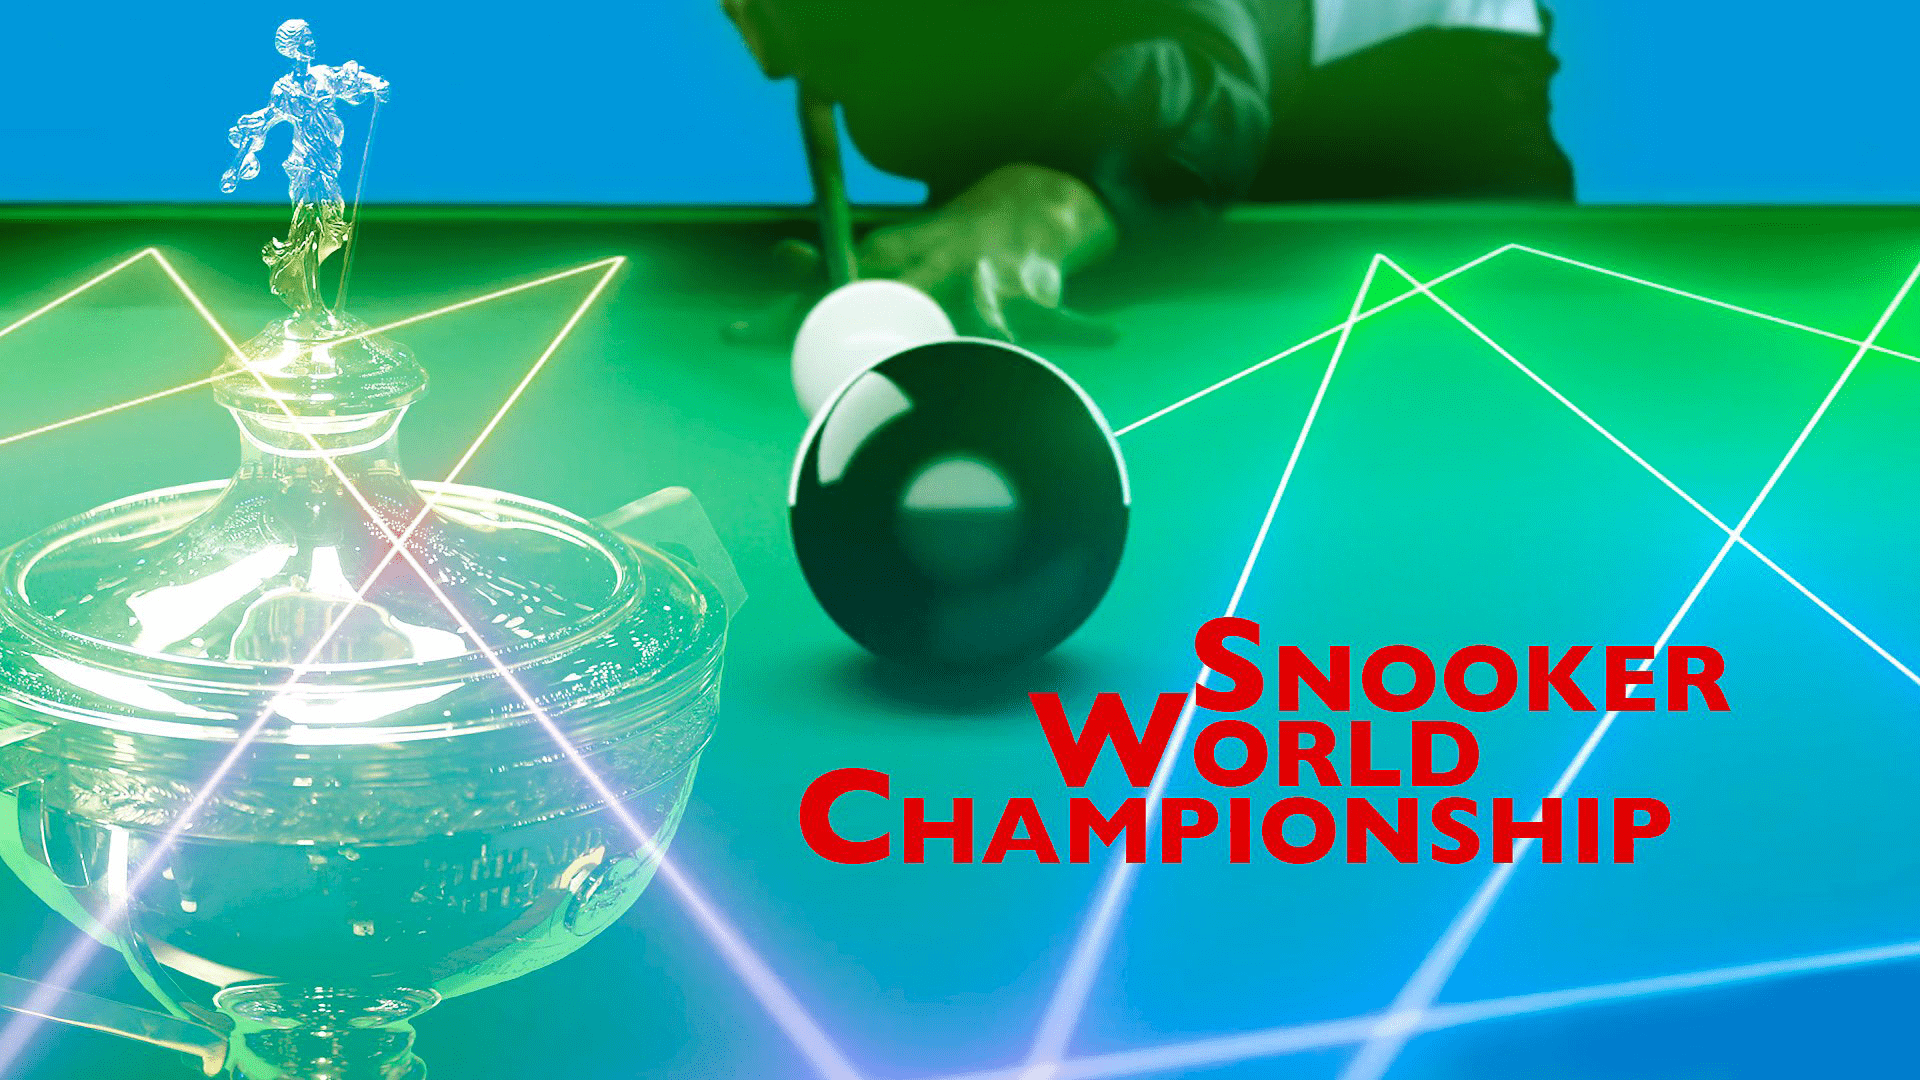 Snooker World Championships